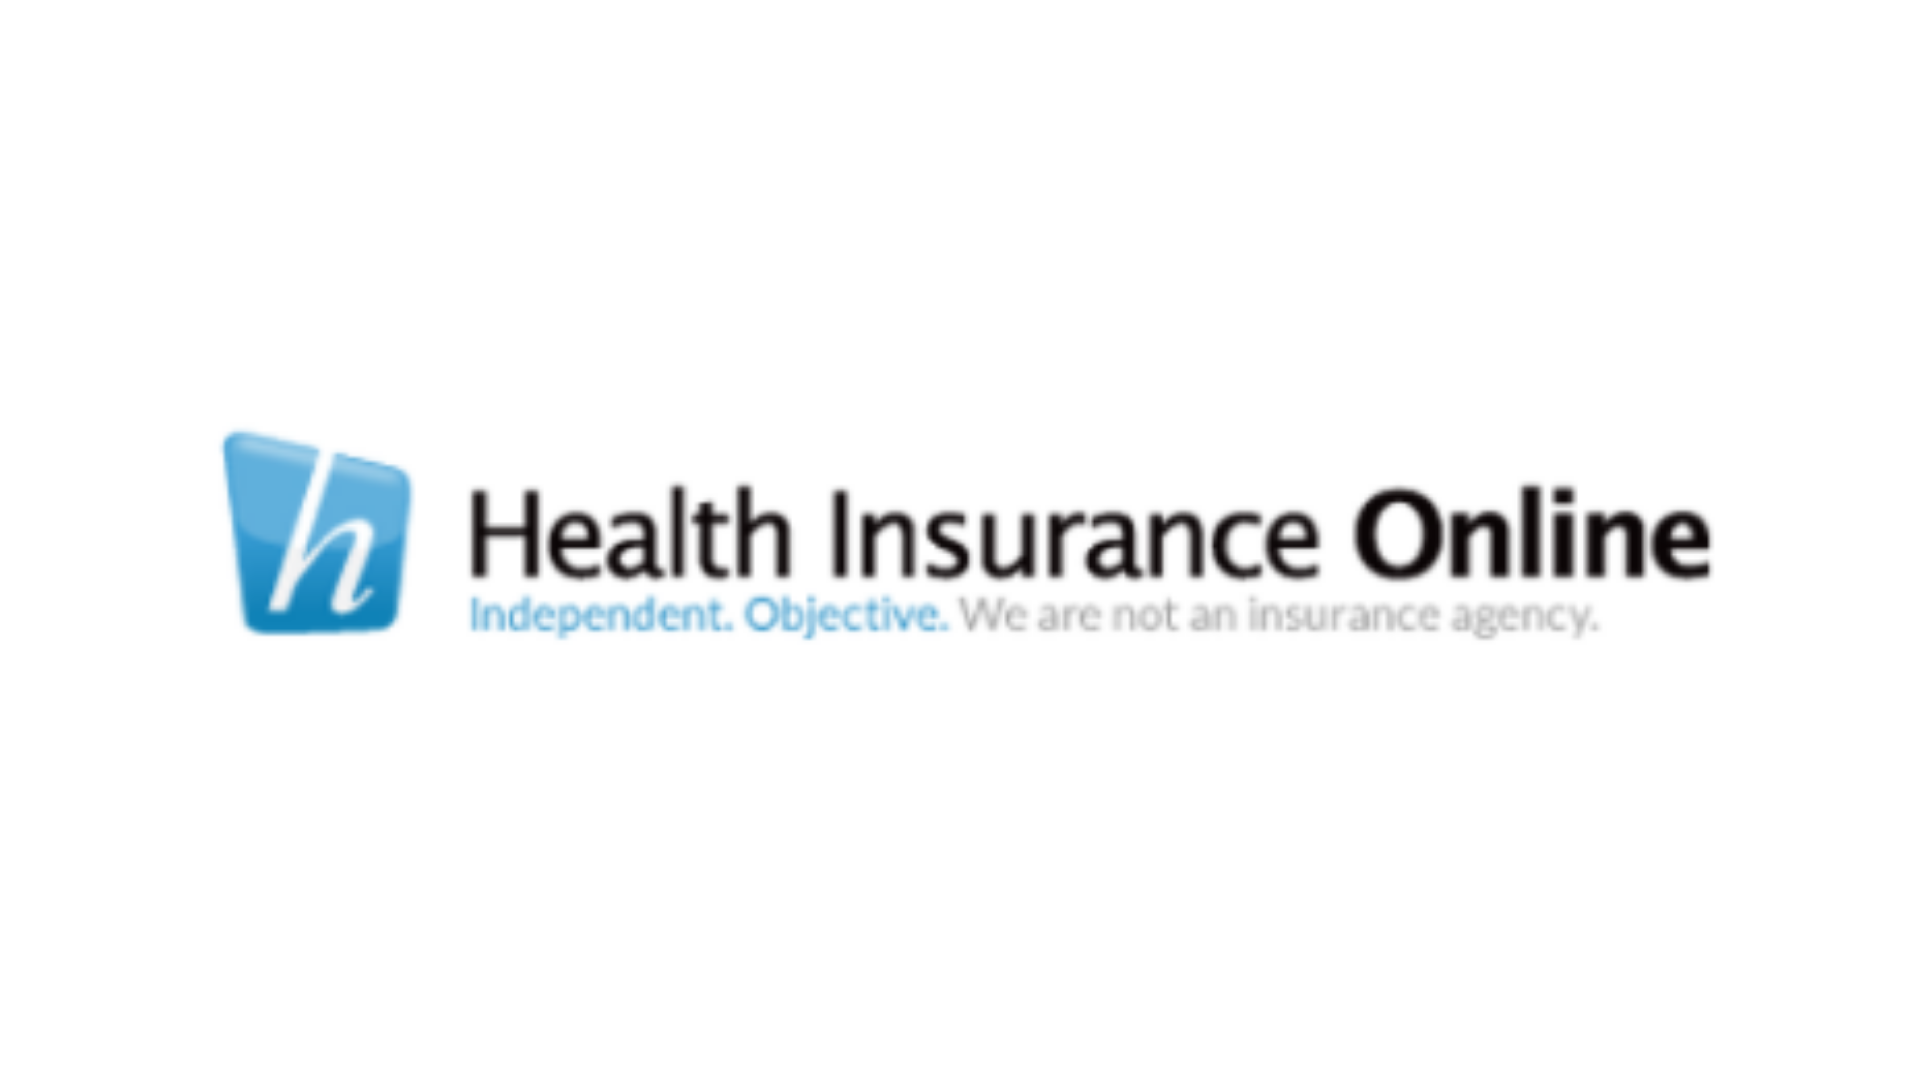 Health Insurance Online – New York, New York